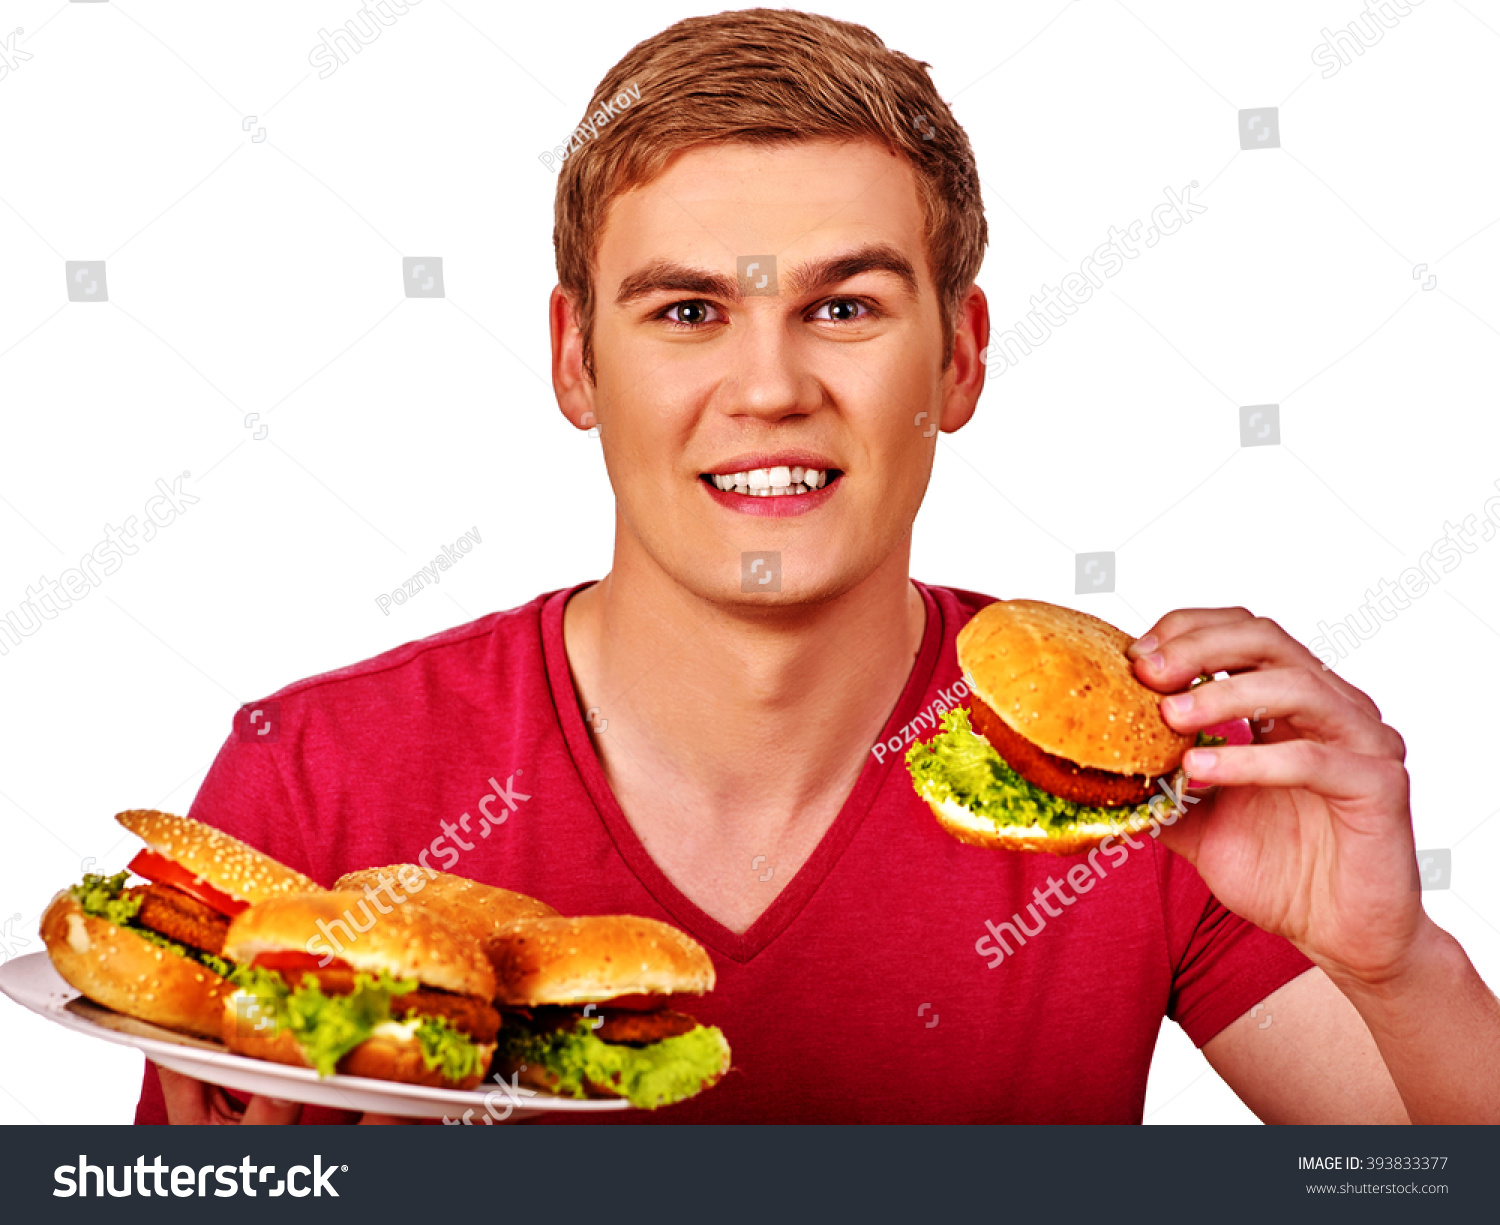 stock-photo-young-man-keeps-and-eating-a-lot-of-big-hamburgers-fastfood-concept-393833377.jpg